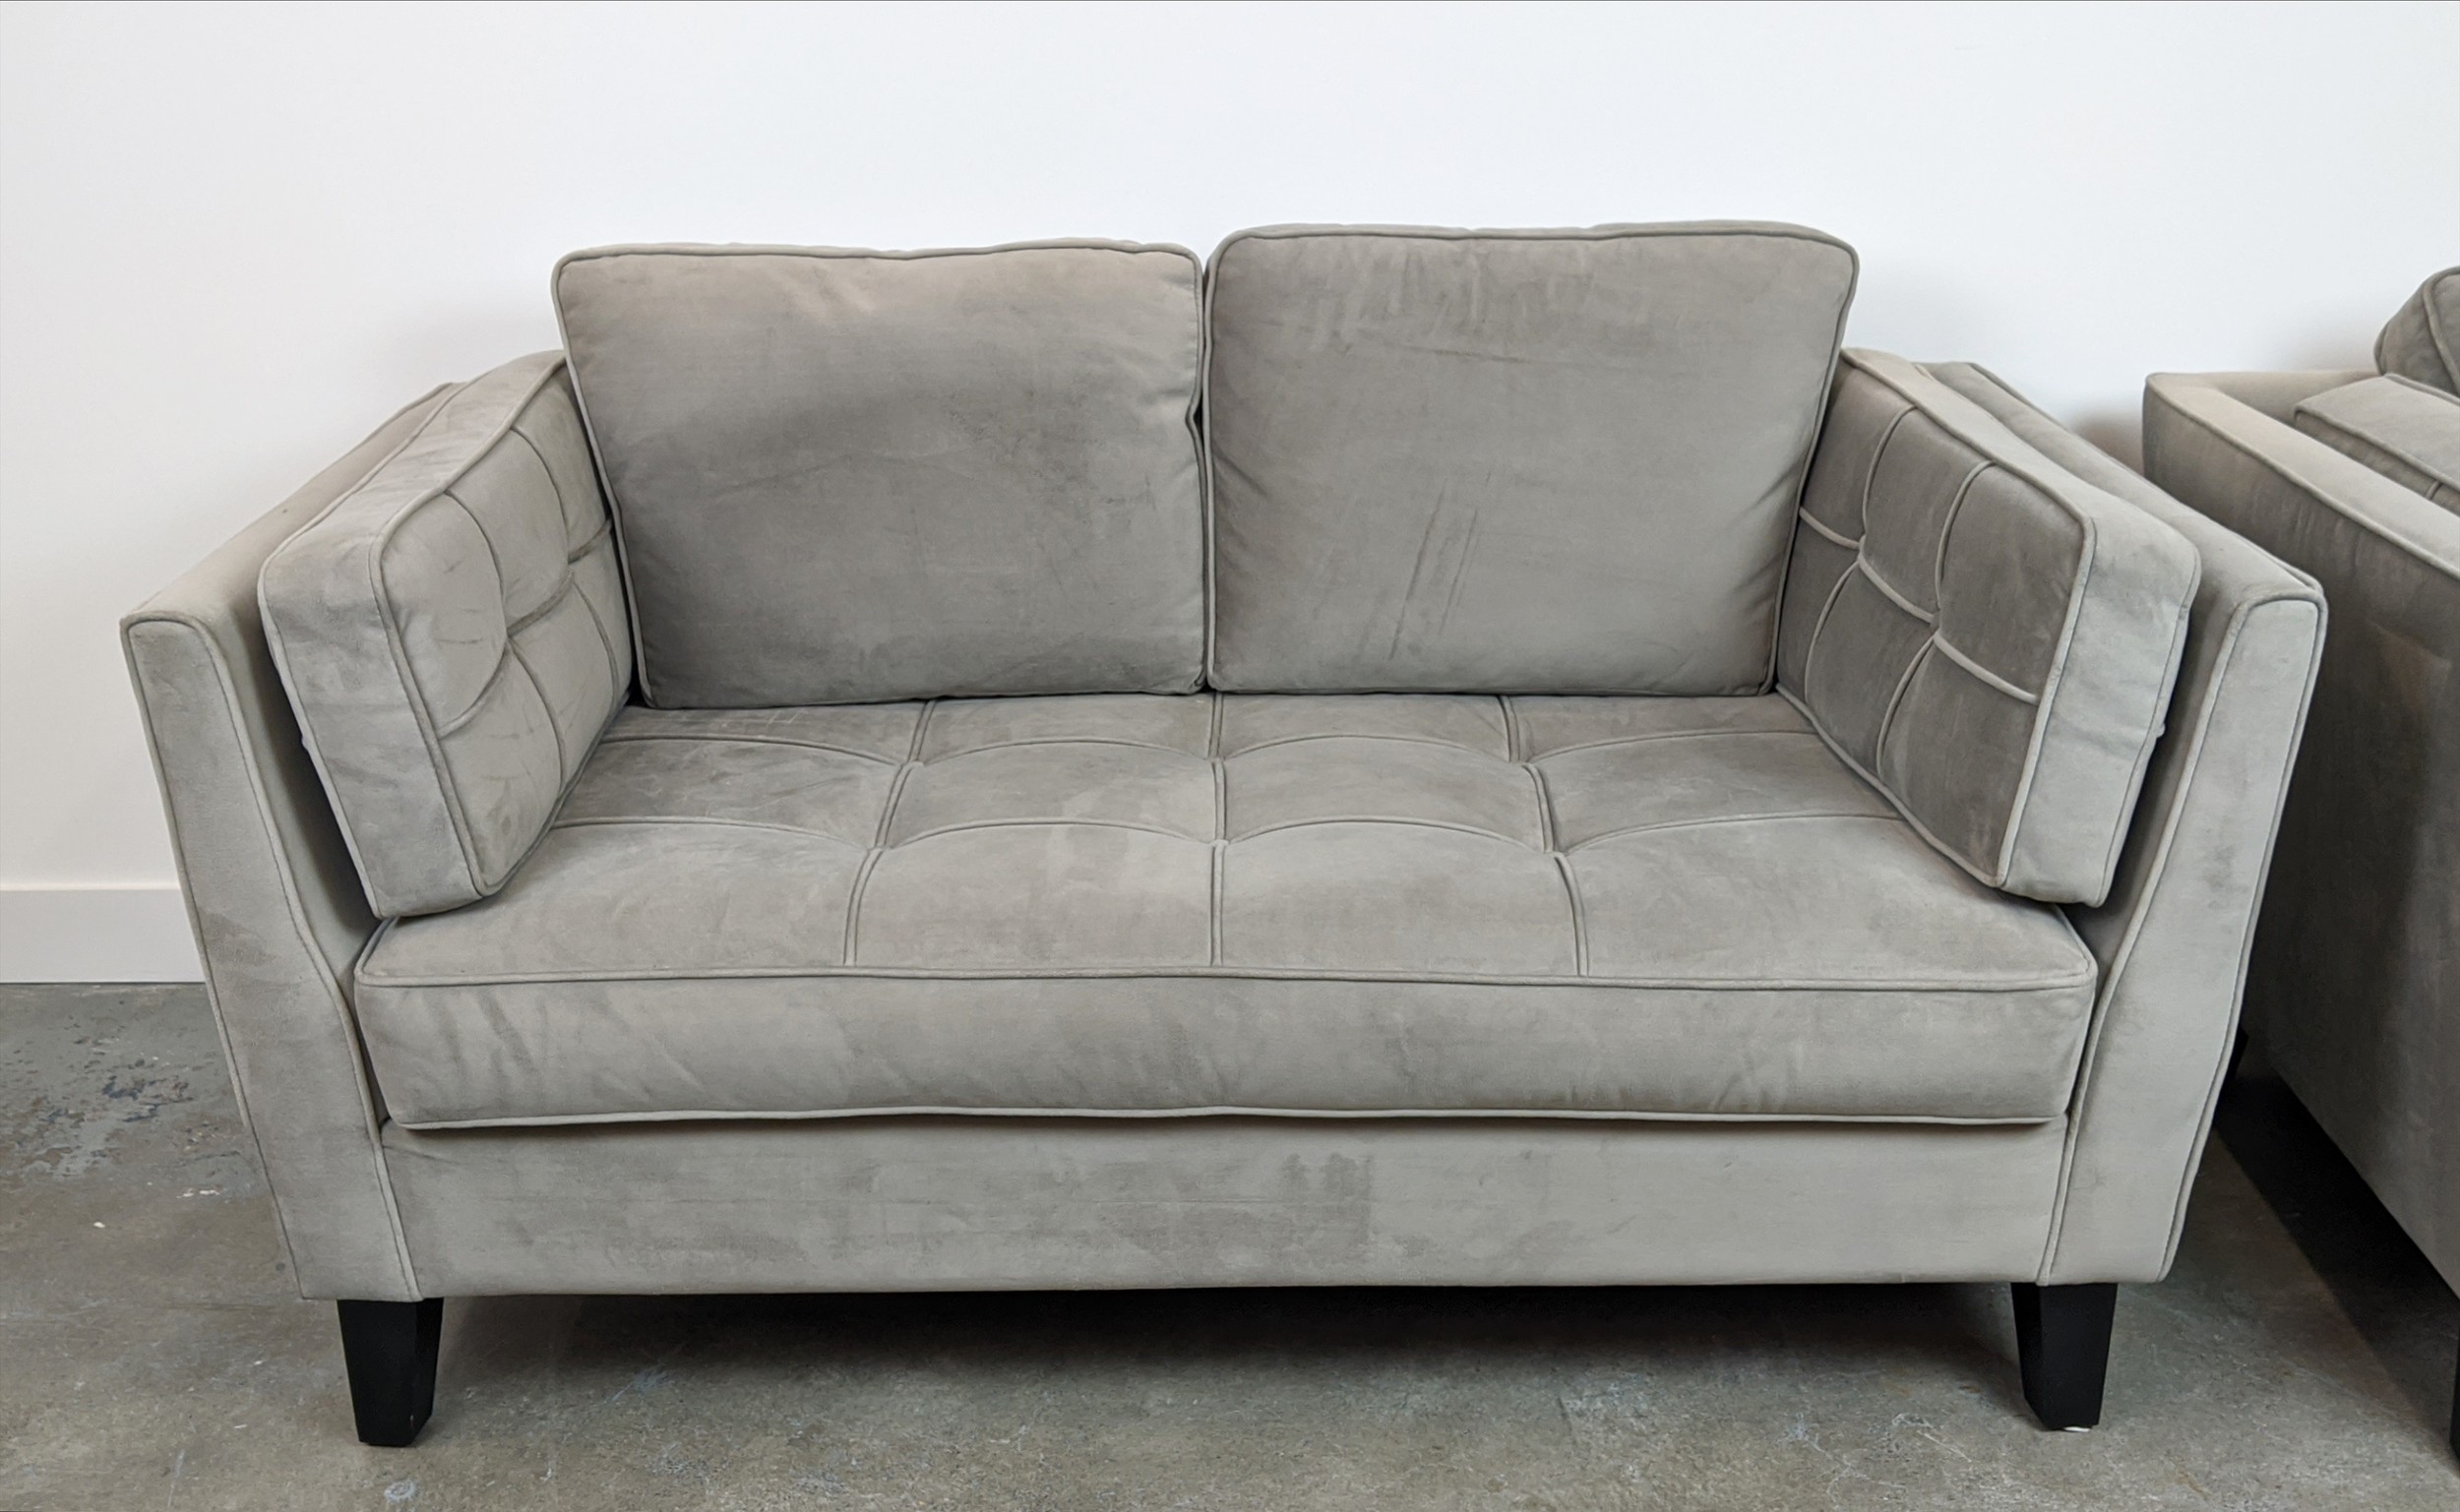 SOFA, 1960s Danish inspired, grey upholstery, 158cm W.